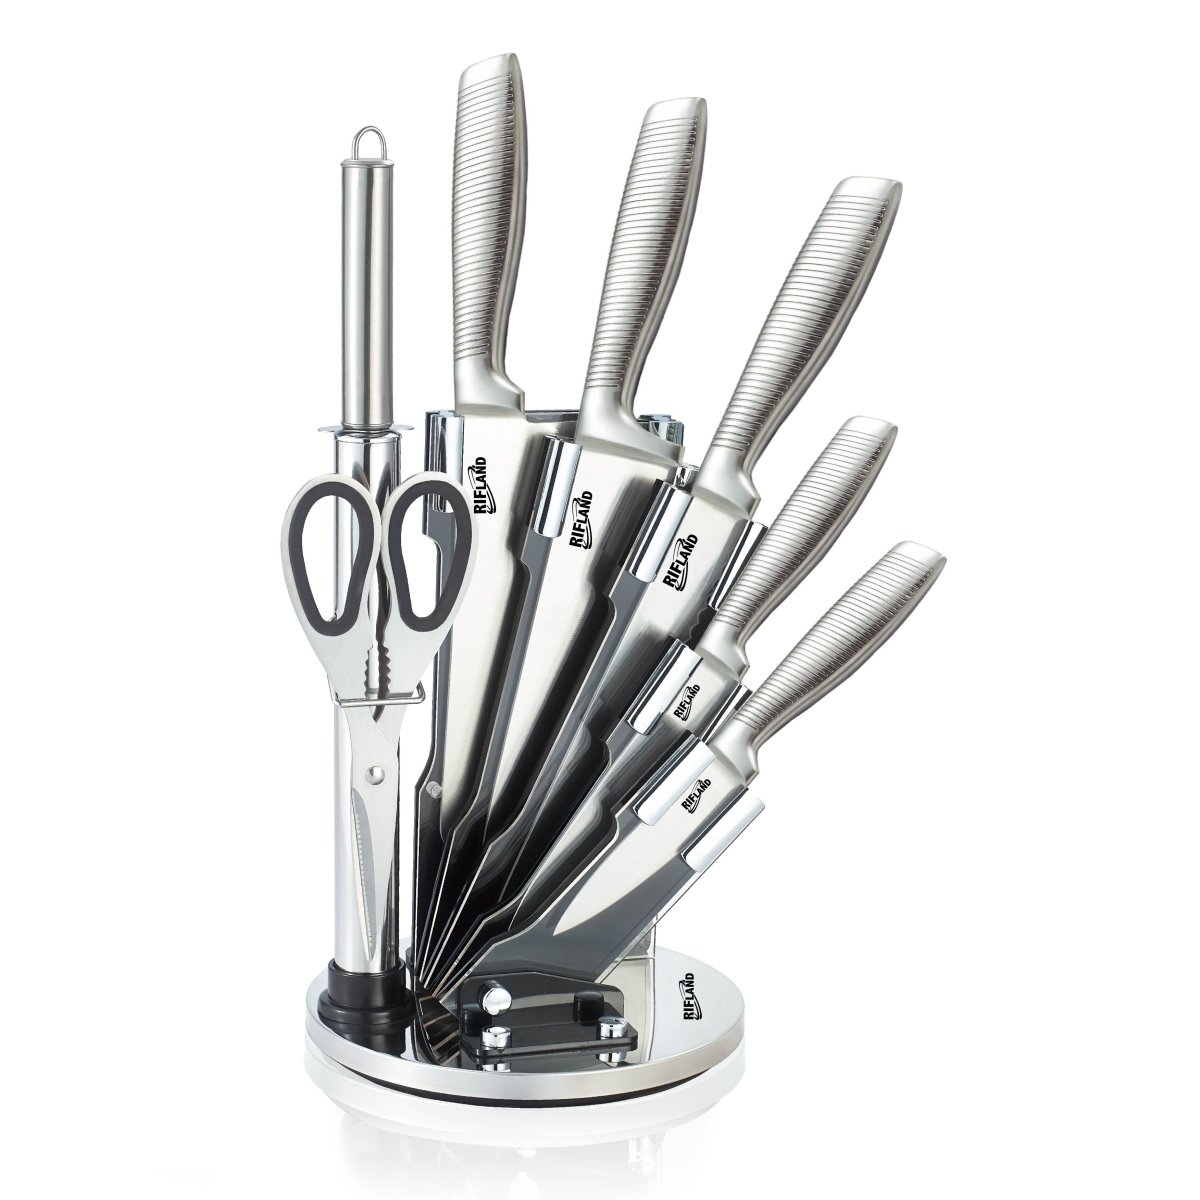 Stainless Steel 8PC Kitchen Chef Knife Block Set Knives Scissor Sharpener AU Deals499